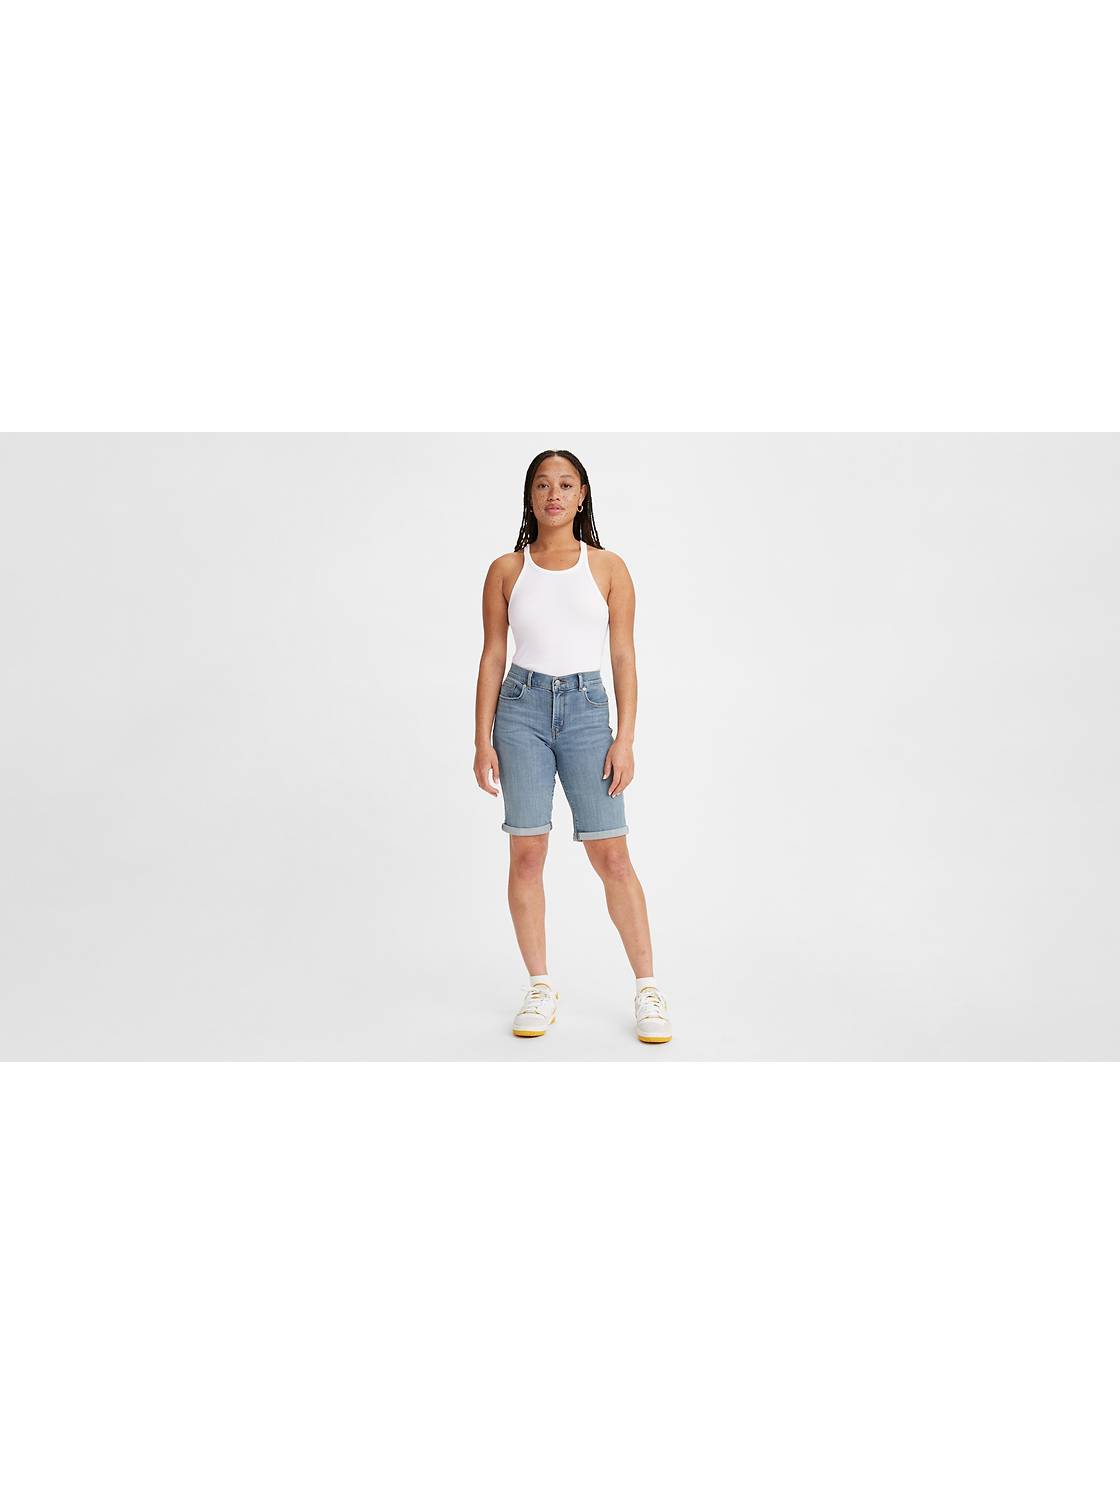 Bermuda Shorts - Denim Shorts for Women |